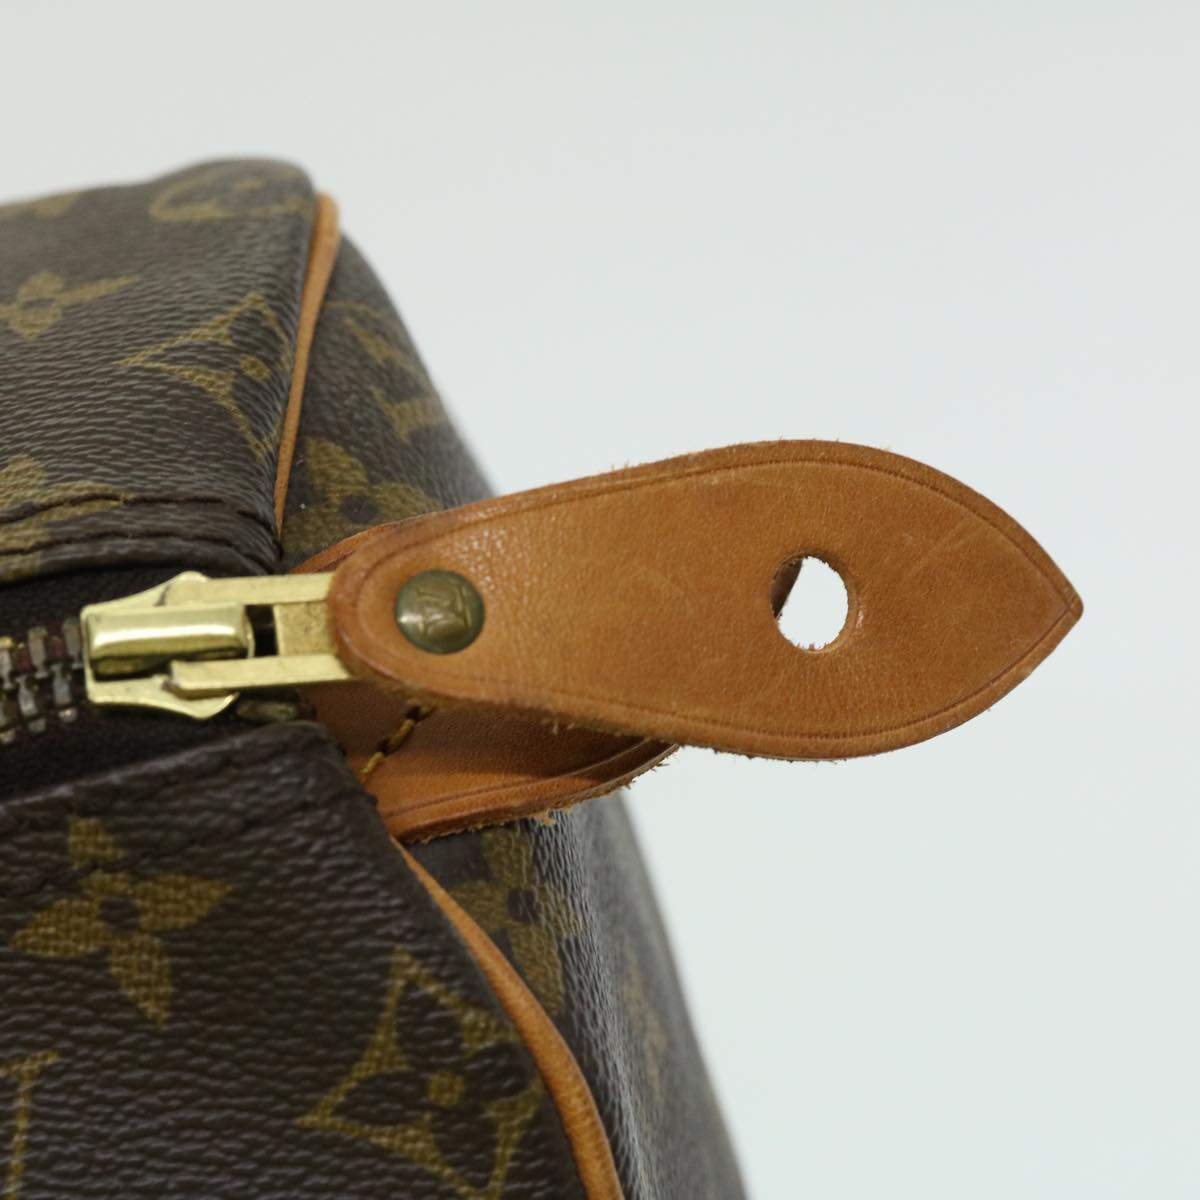 Louis-Vuitton-Monogram-Speedy-40-Hand-Bag-Boston-Bag-M41522 –  dct-ep_vintage luxury Store